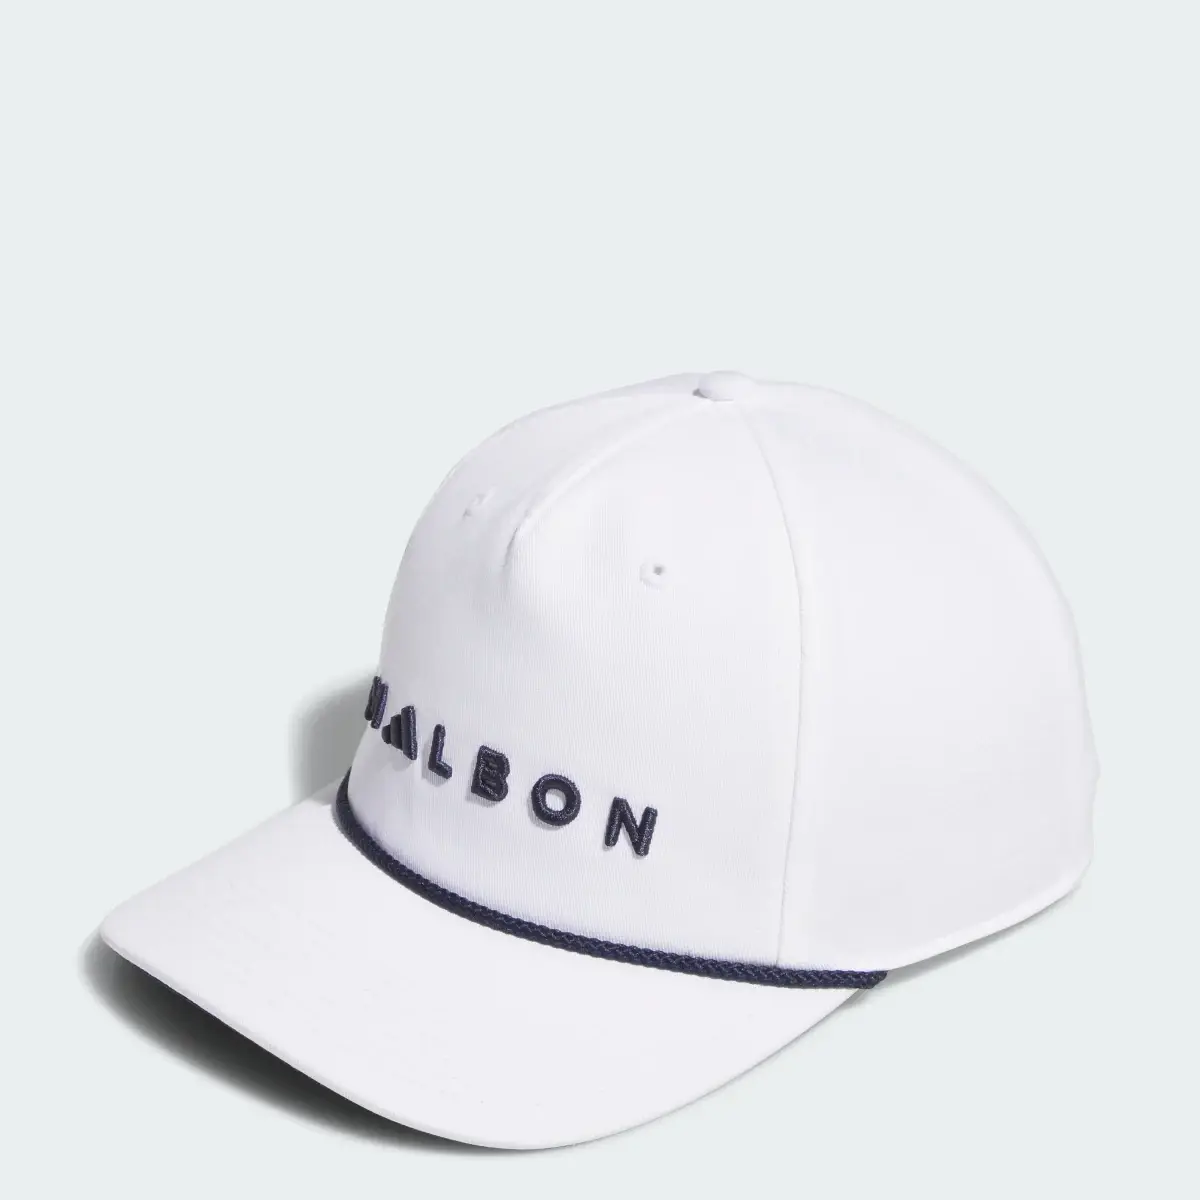 Adidas x Malbon Five-Panel Rope Hat. 1